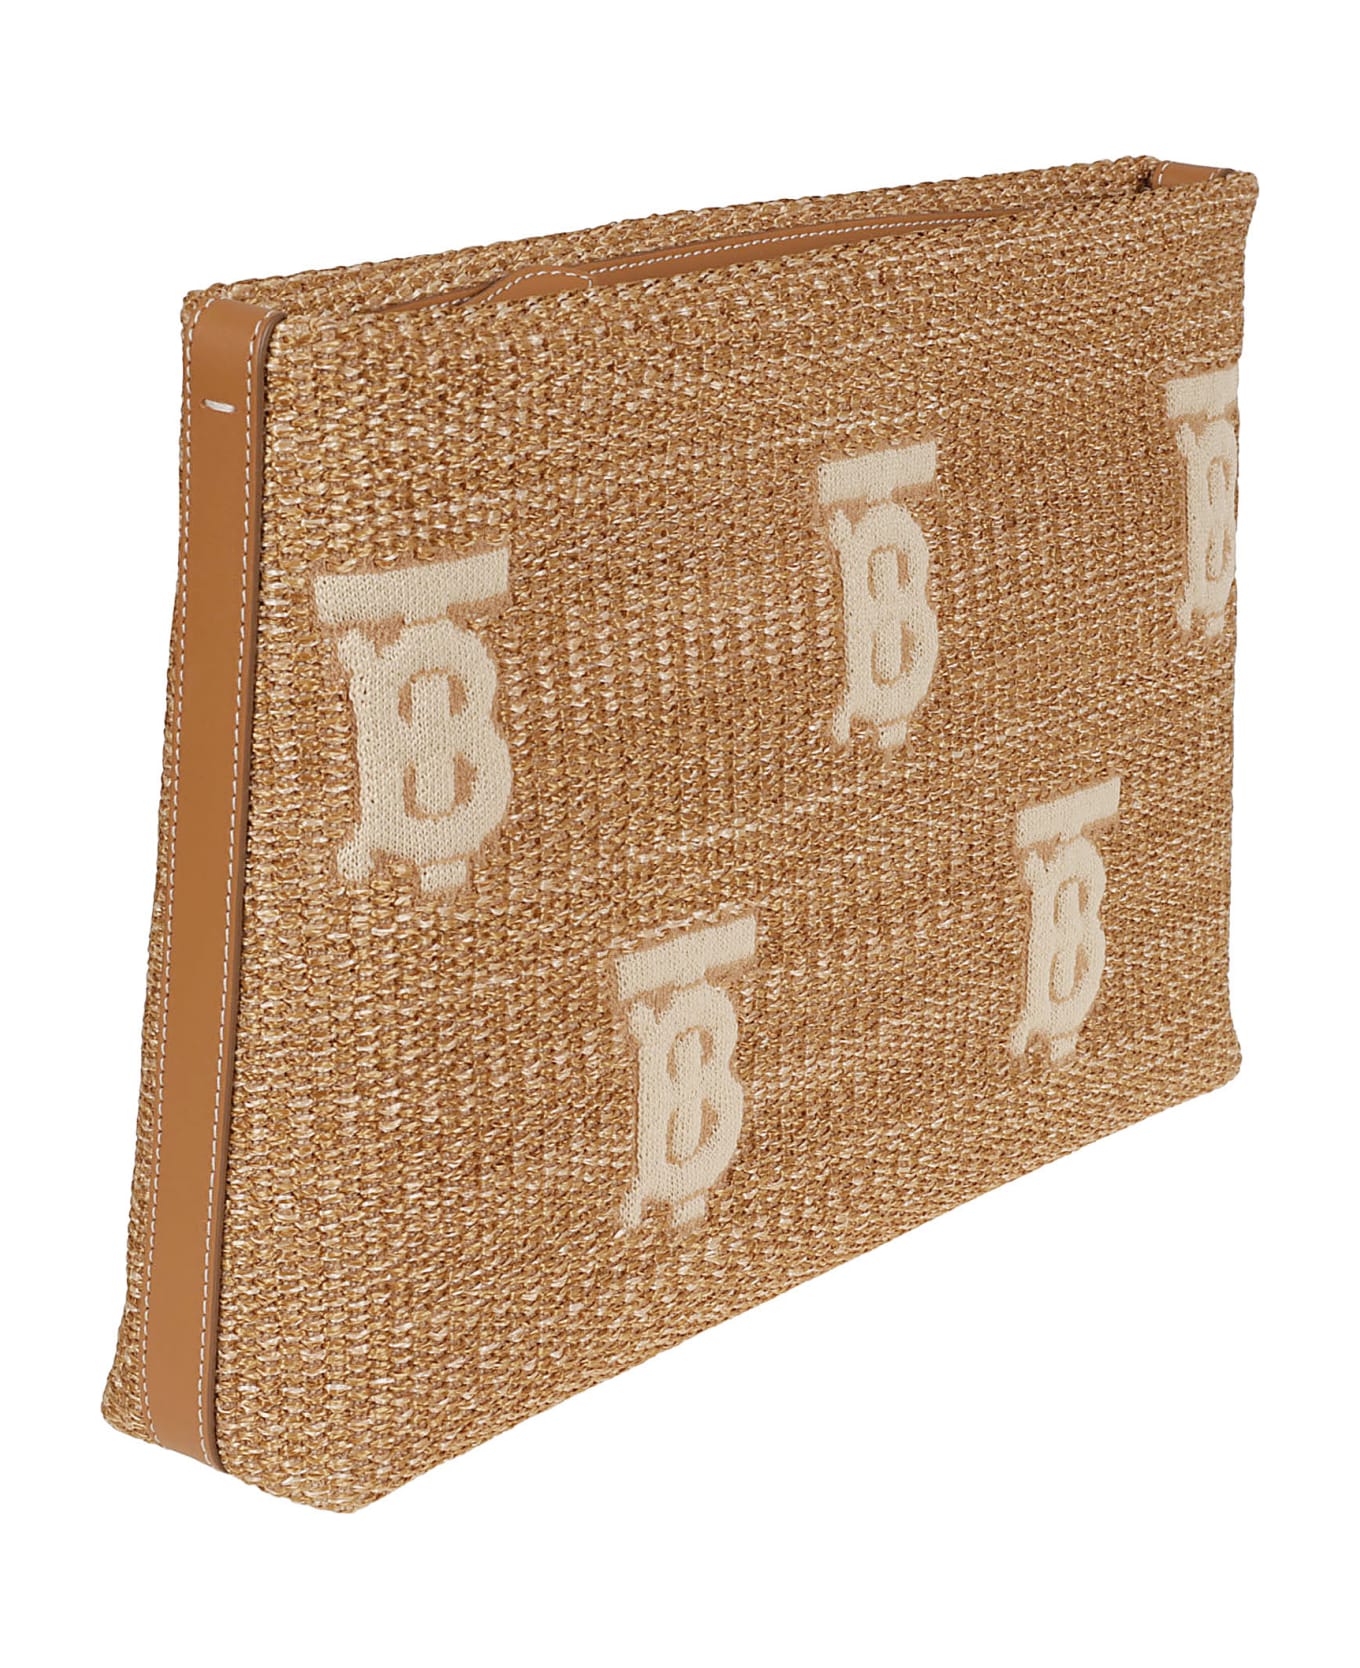 Burberry Logo Weaved Clutch - Natural/beige トートバッグ